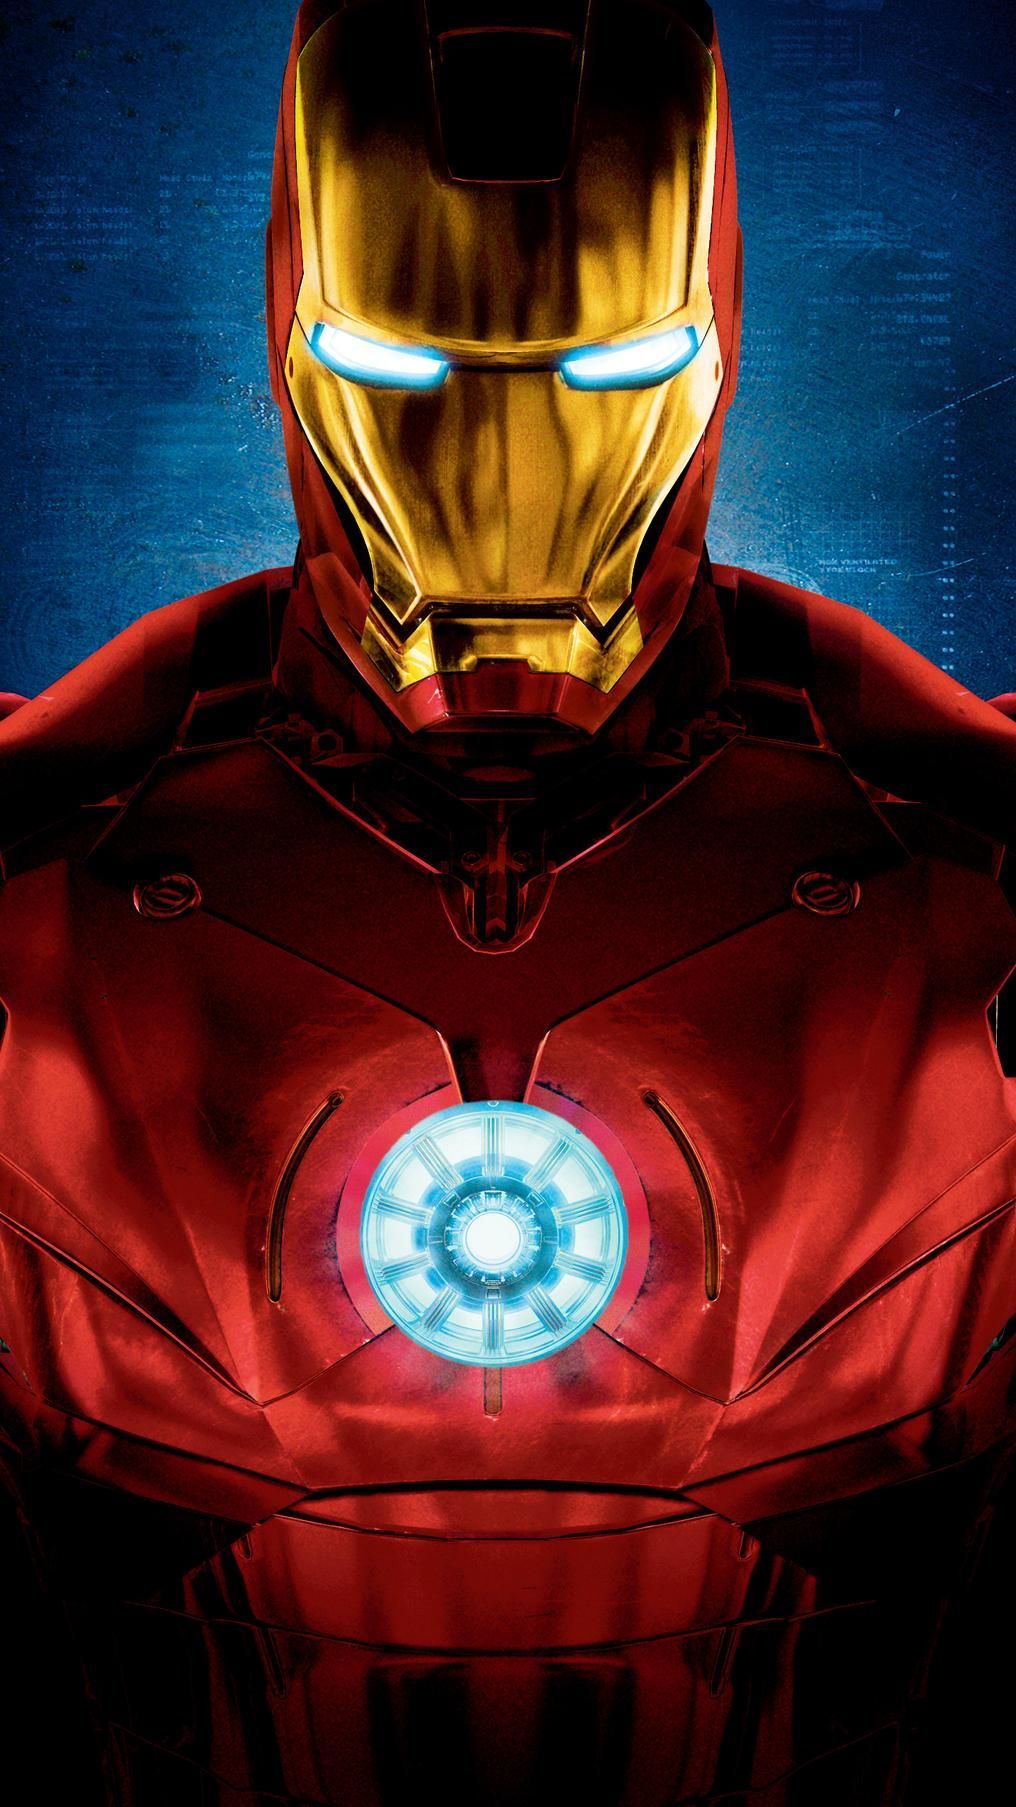 Iron Man (2008) Phone Wallpaper. Iron man HD wallpaper, Iron man